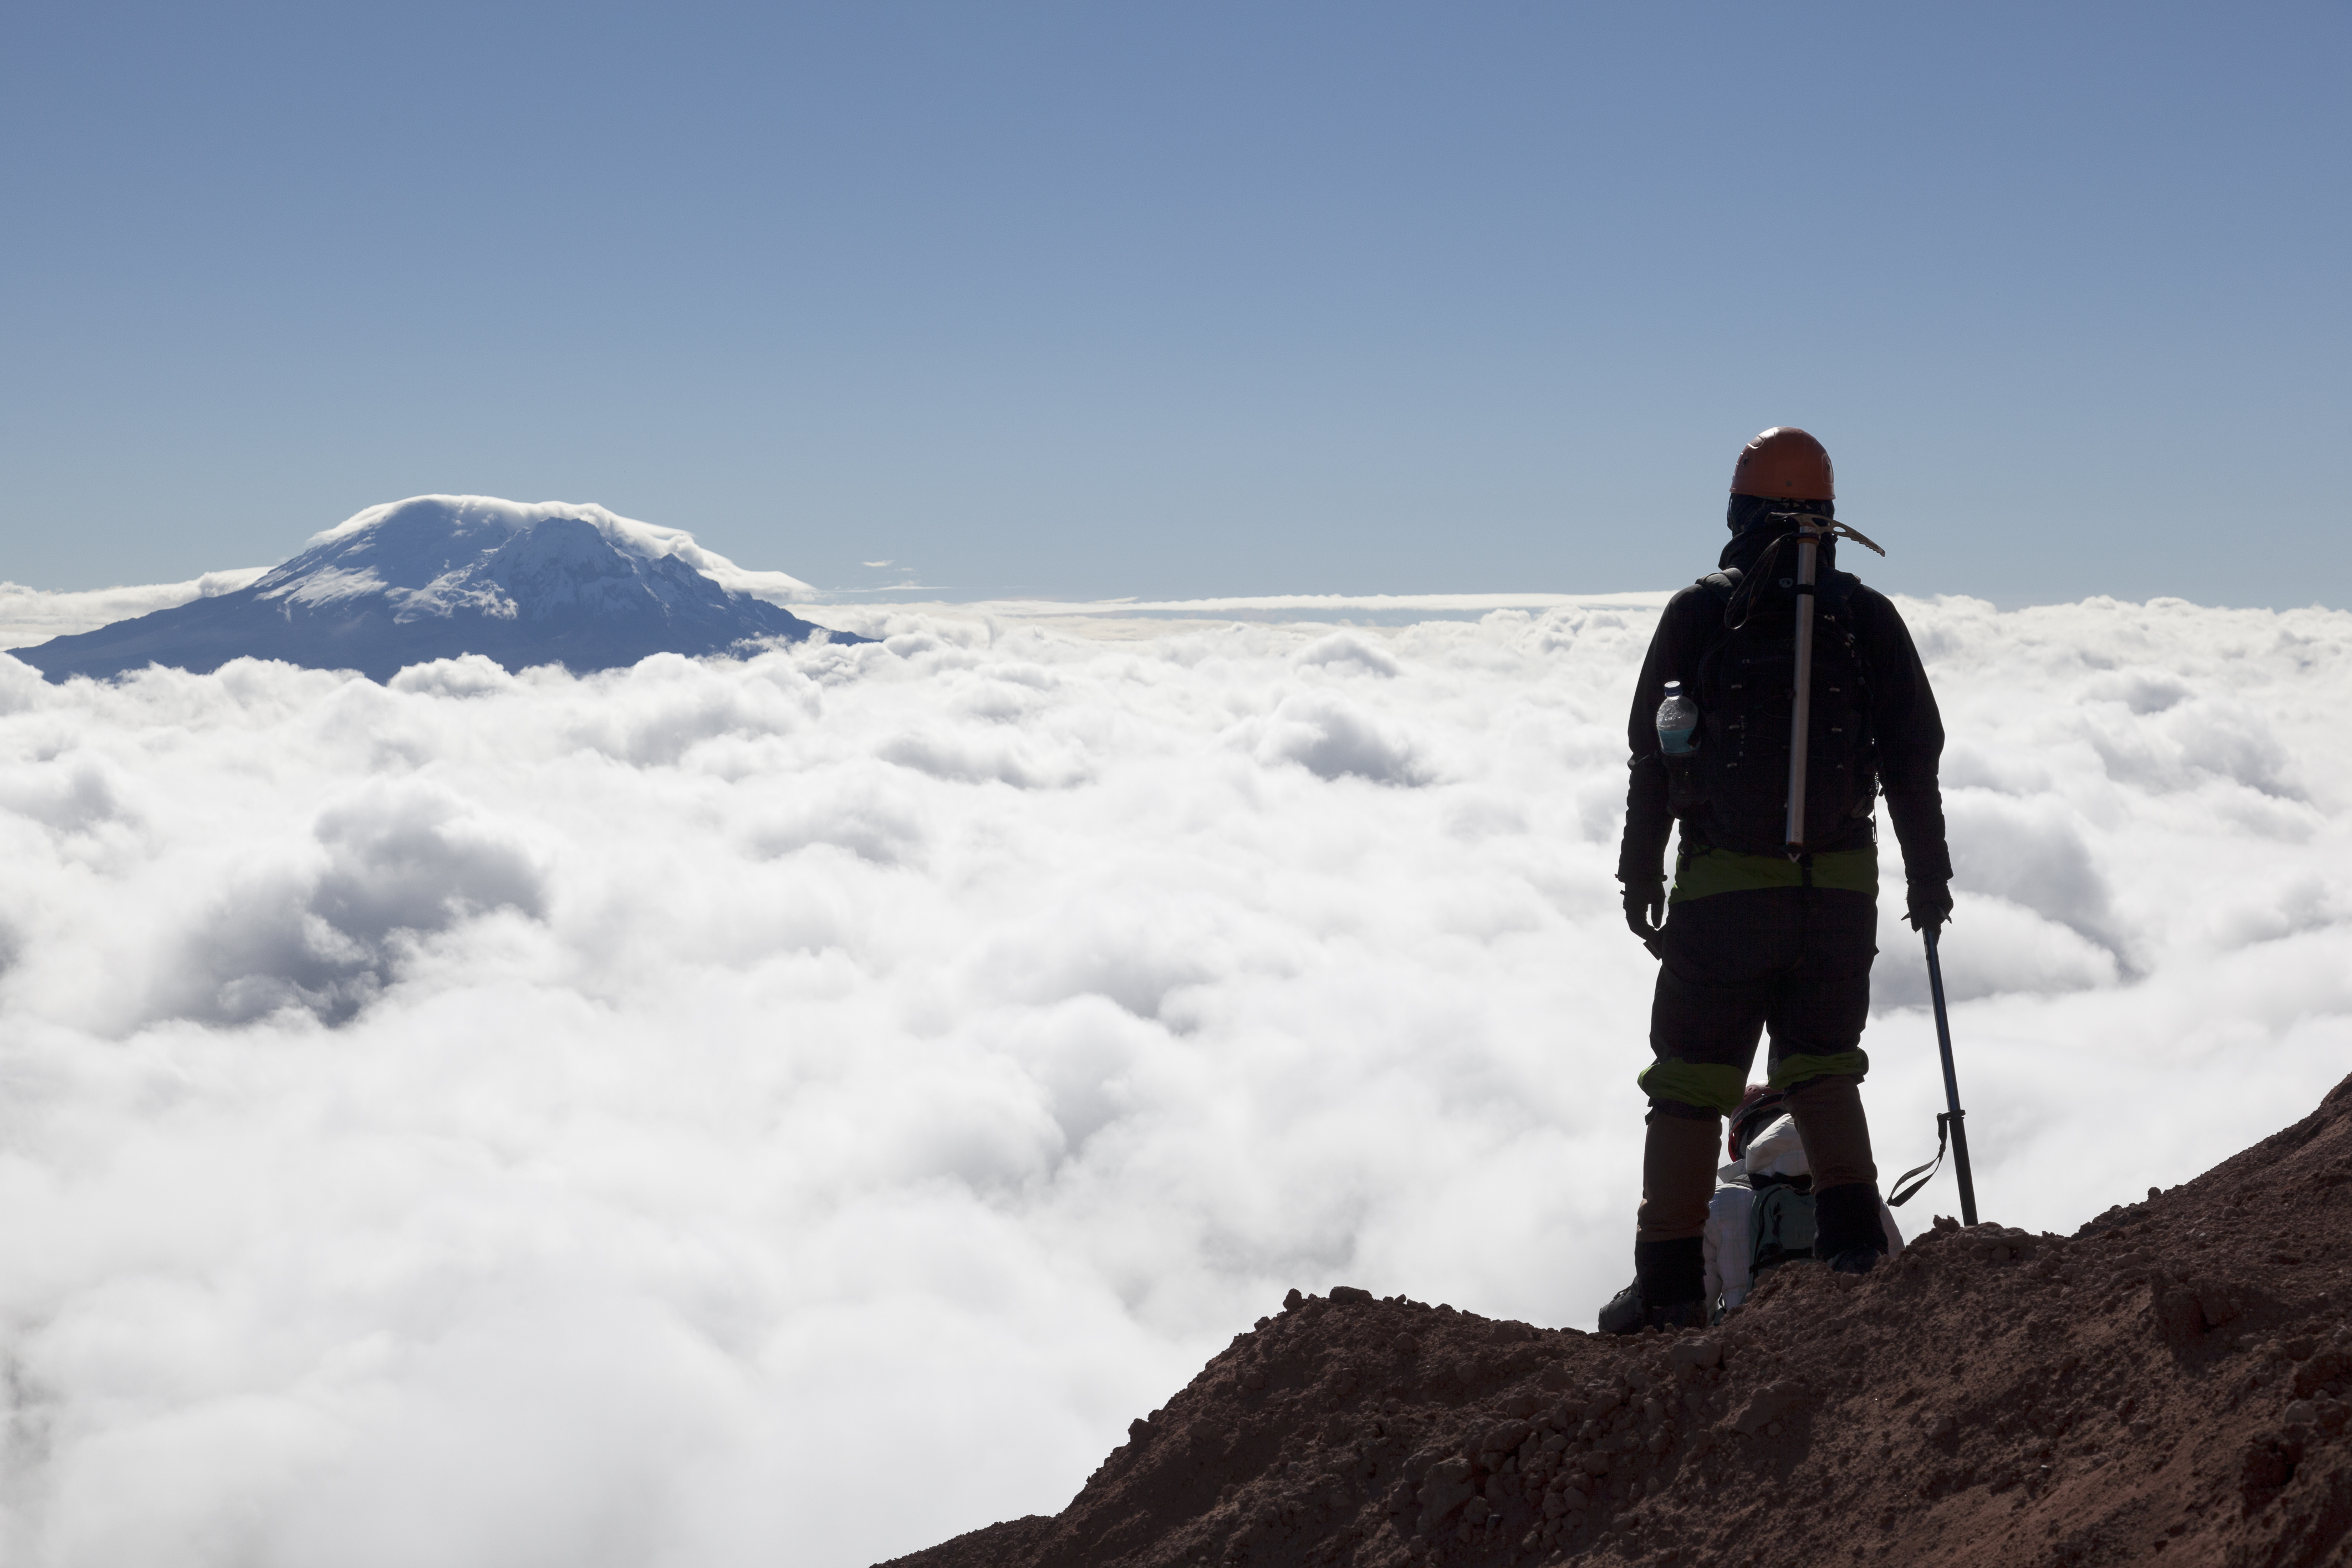 Colombia & Ecuador's Snowcapped Volcanoes Trek and Climb Program